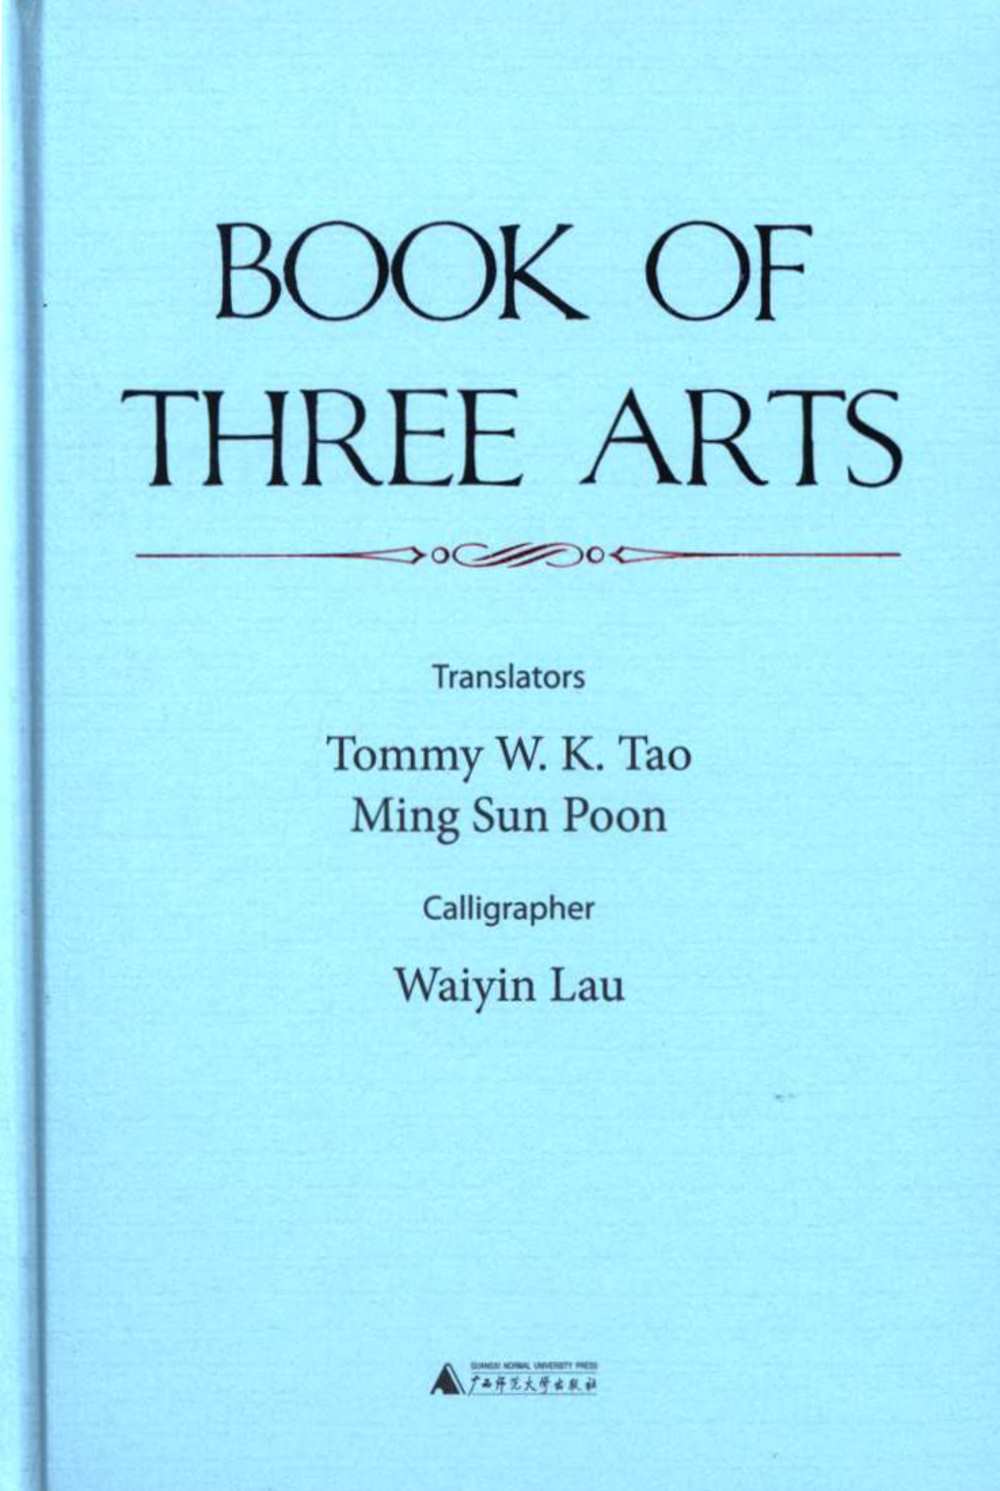 BOOK OF THREE ARTS